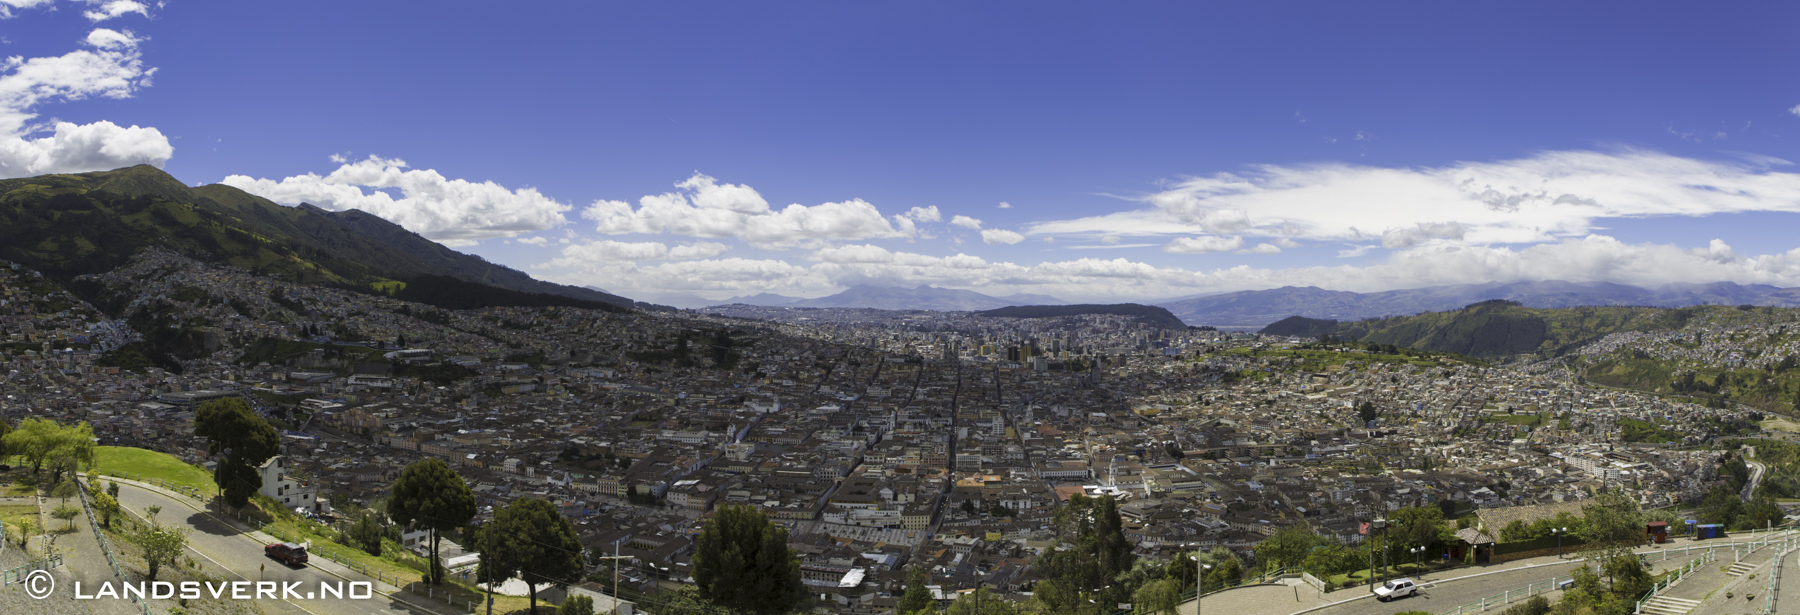 Quito (Old Town), Ecuador. 

(Canon EOS 5D Mark III / Canon EF 24-70mm f/2.8 L USM)